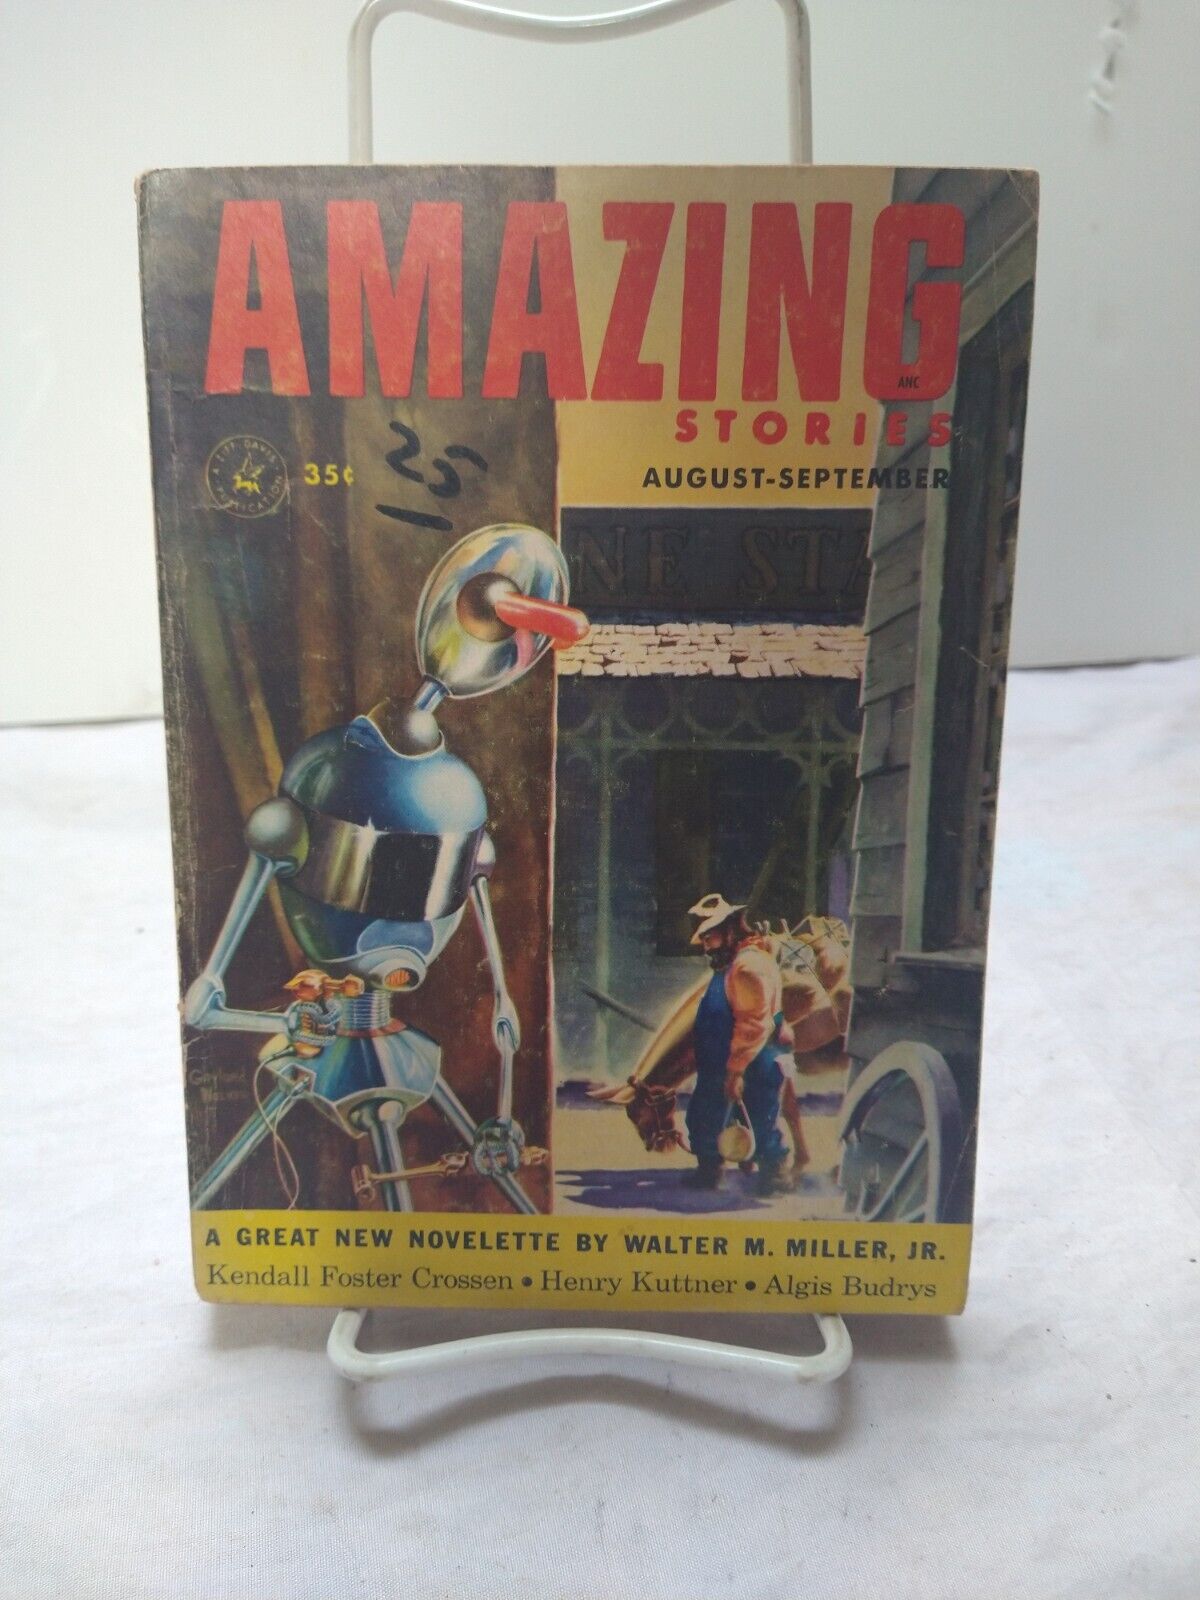 Amazing Stories August-September 1953 Vol. 27 No. 6 Walter M. Miller, Jr.